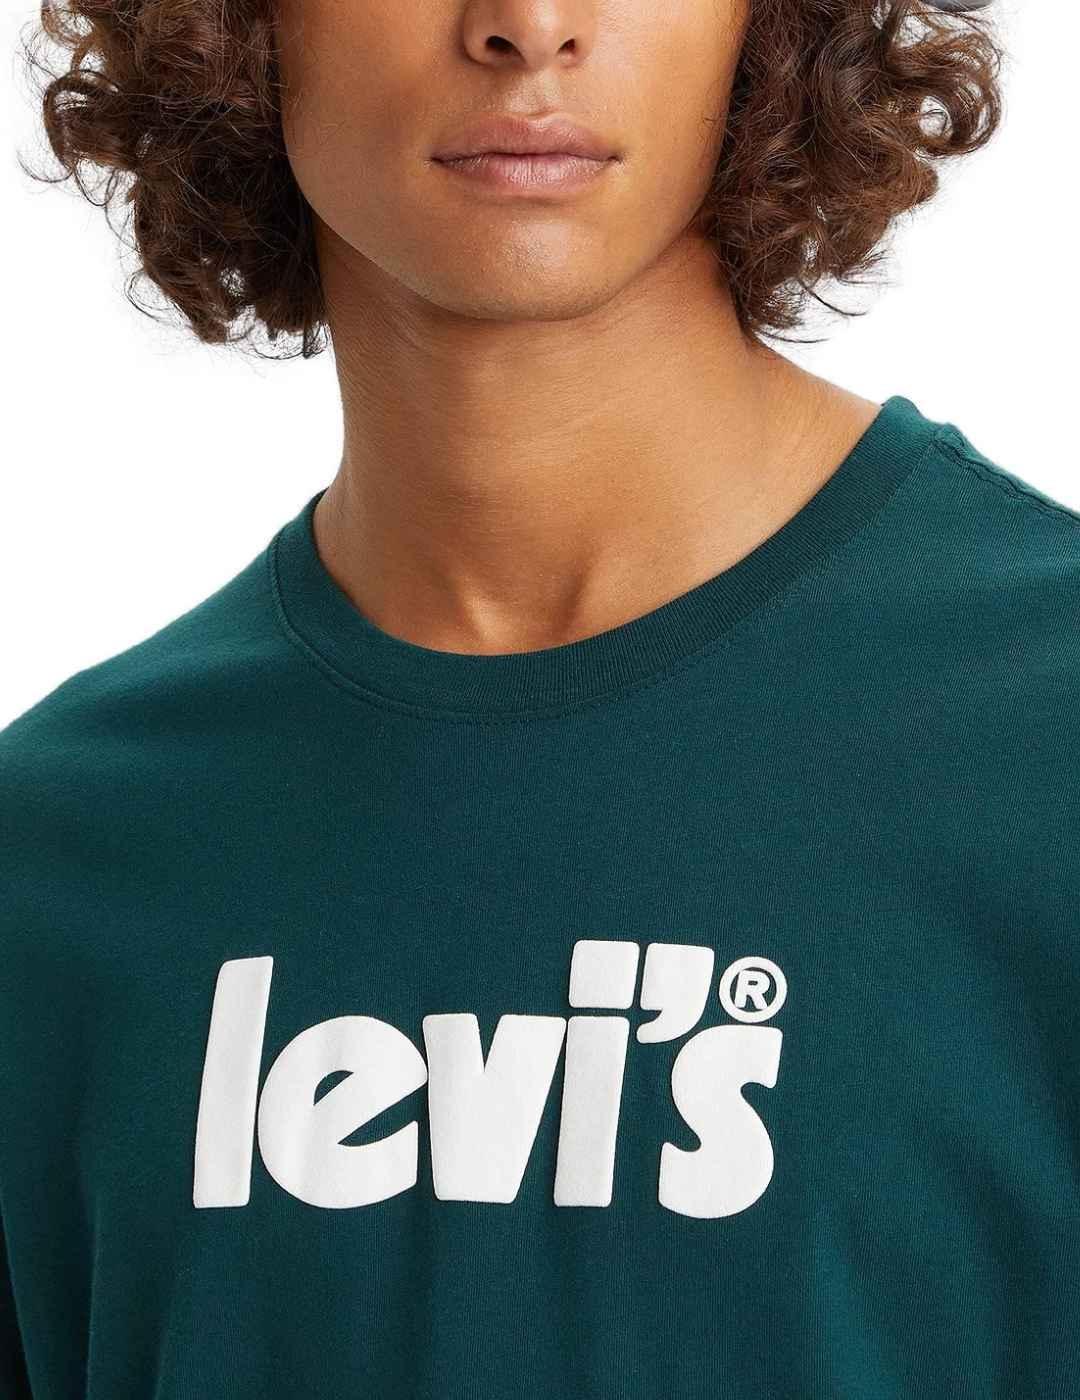 Camiseta Levis relaxed verde para hombre-b